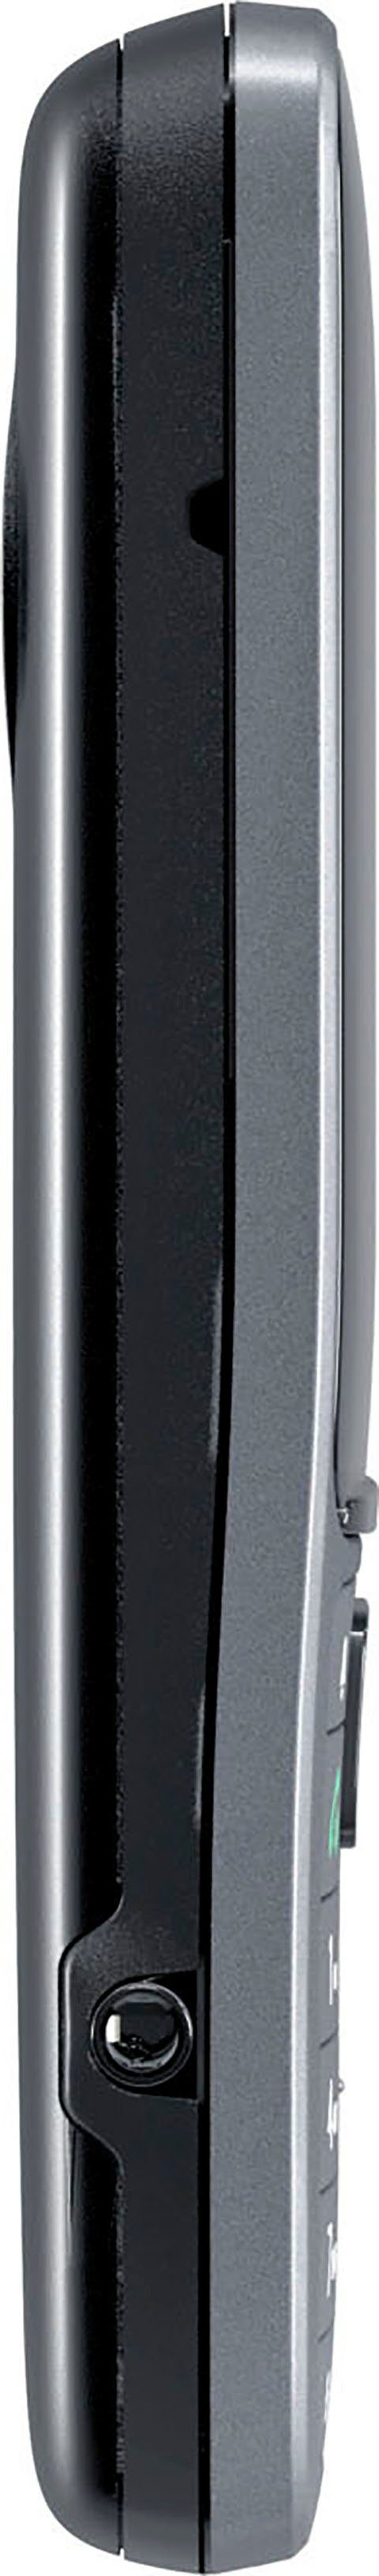 D142 DECT Festnetztelefon Handset elmeg (Bluetooth) Telekom